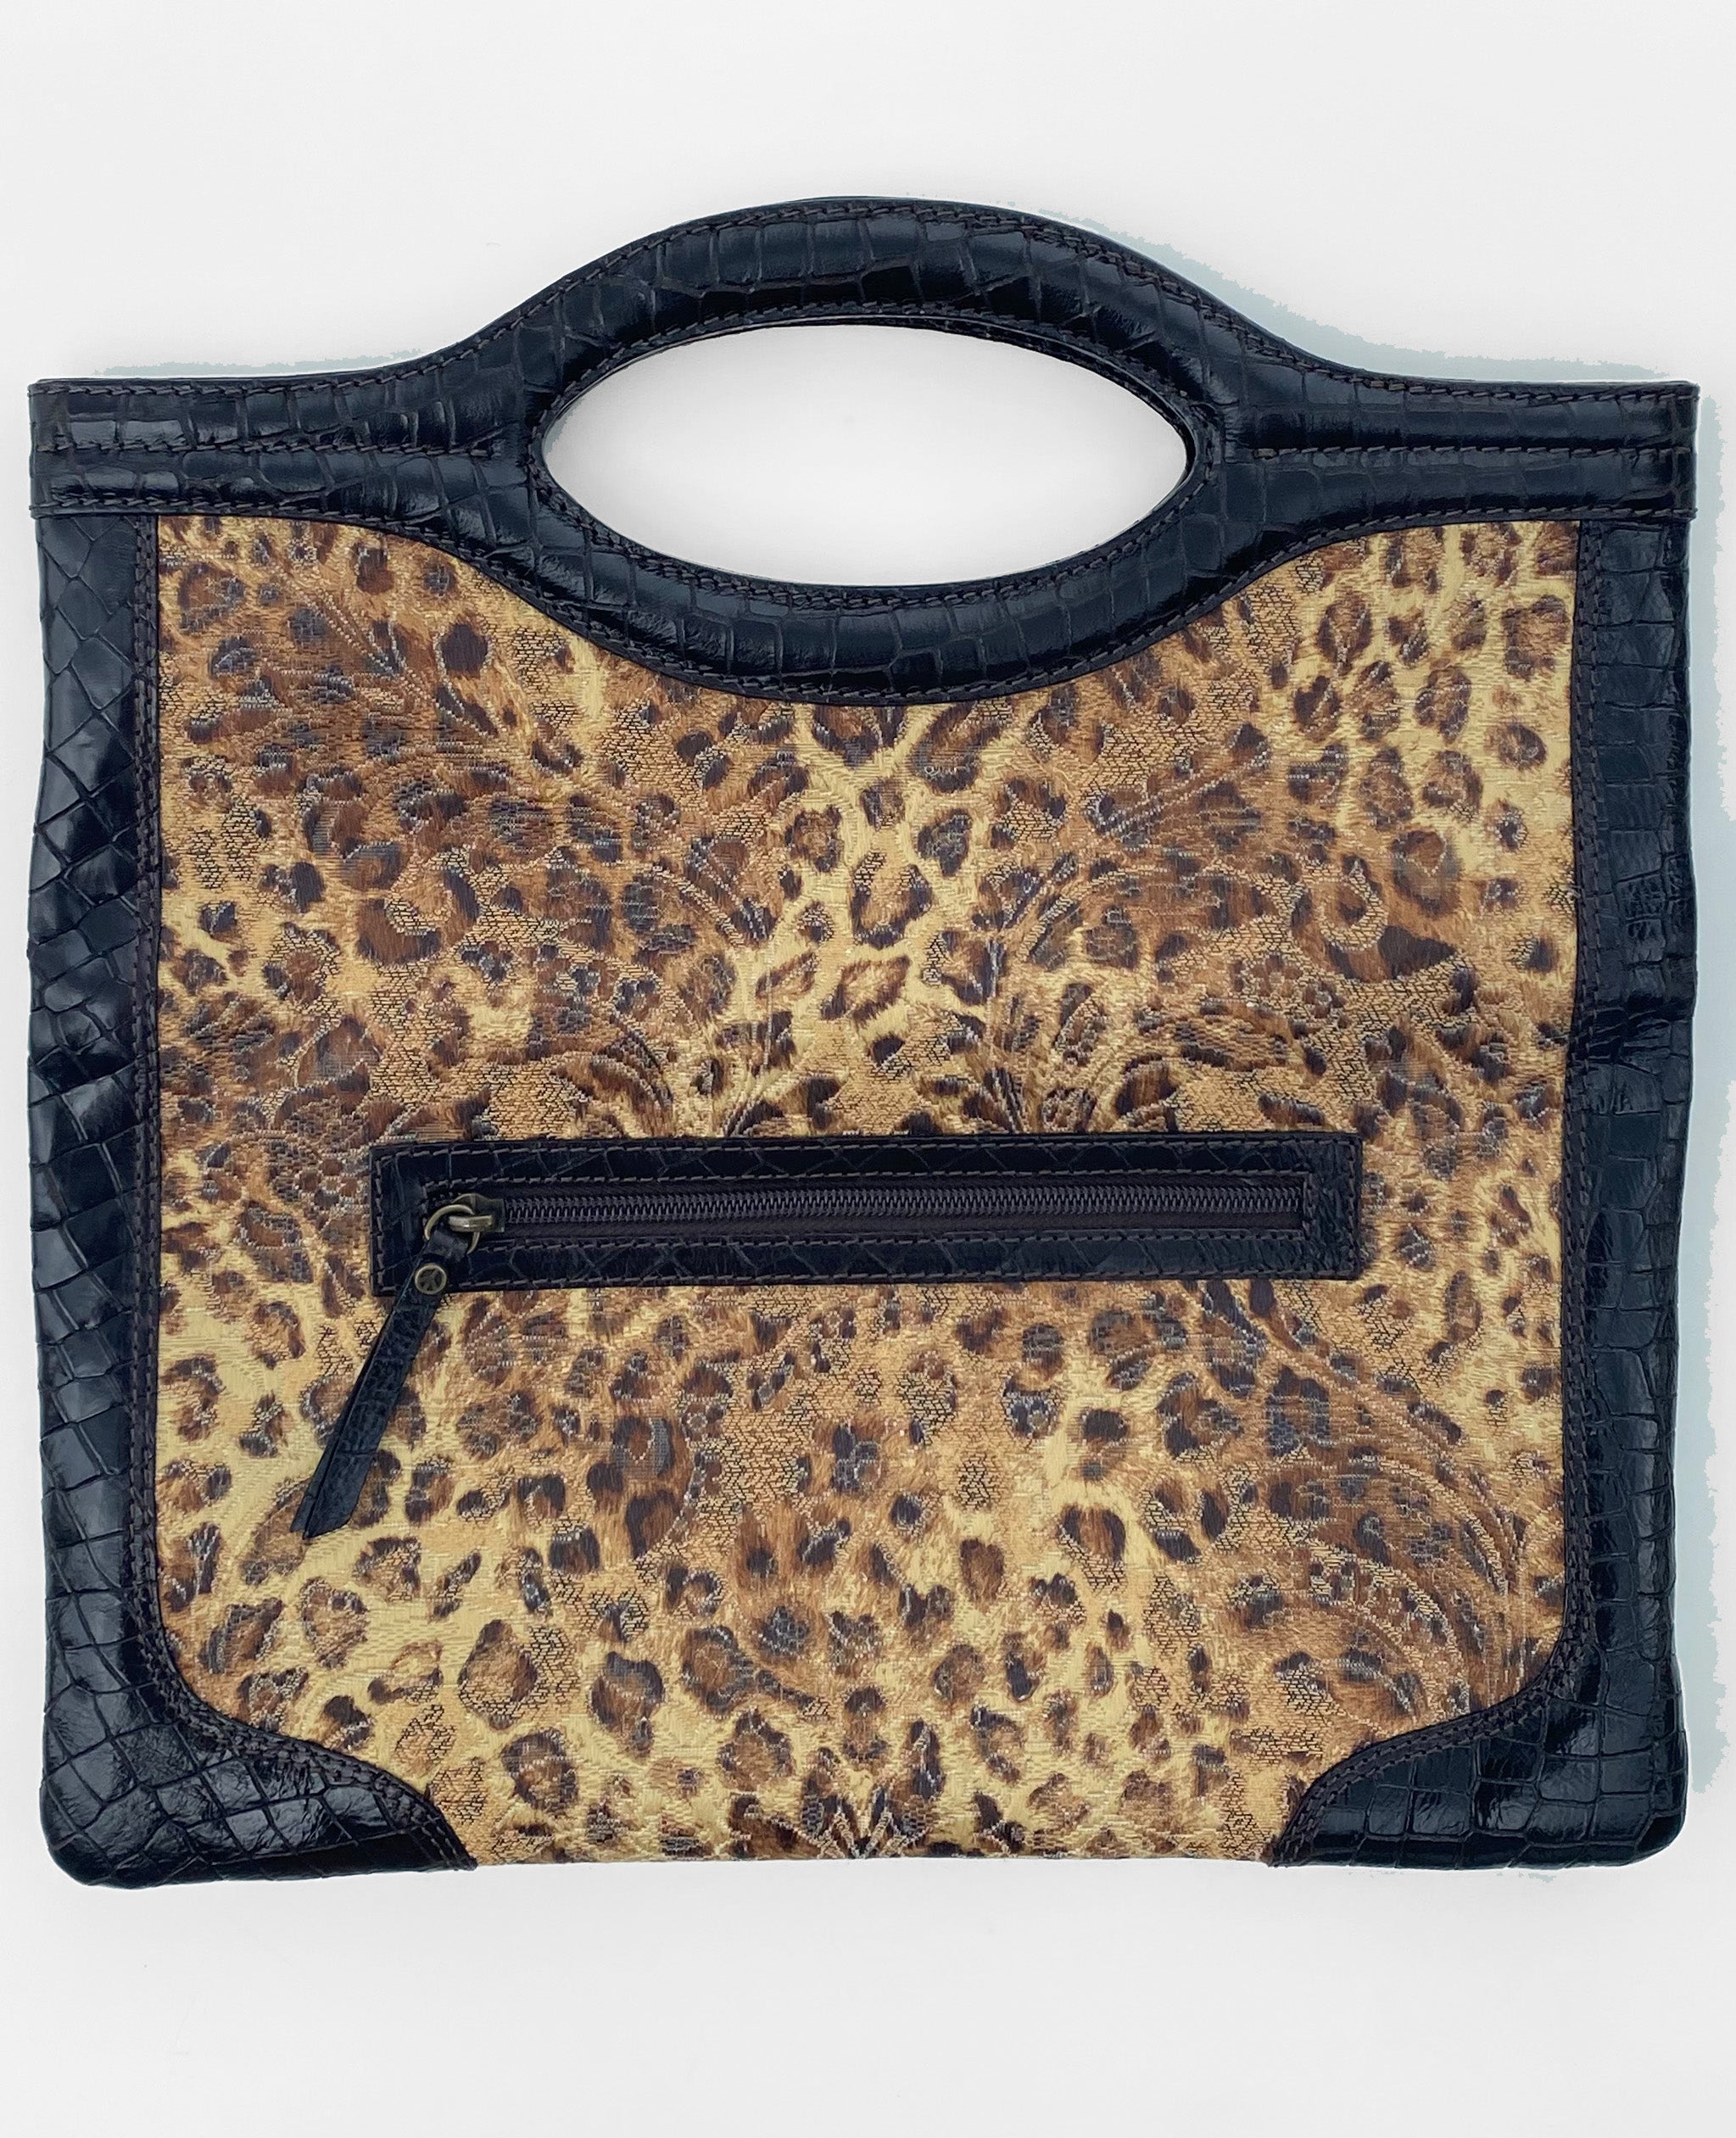 Cheetah Floral Print Fold Over Clutch Bag